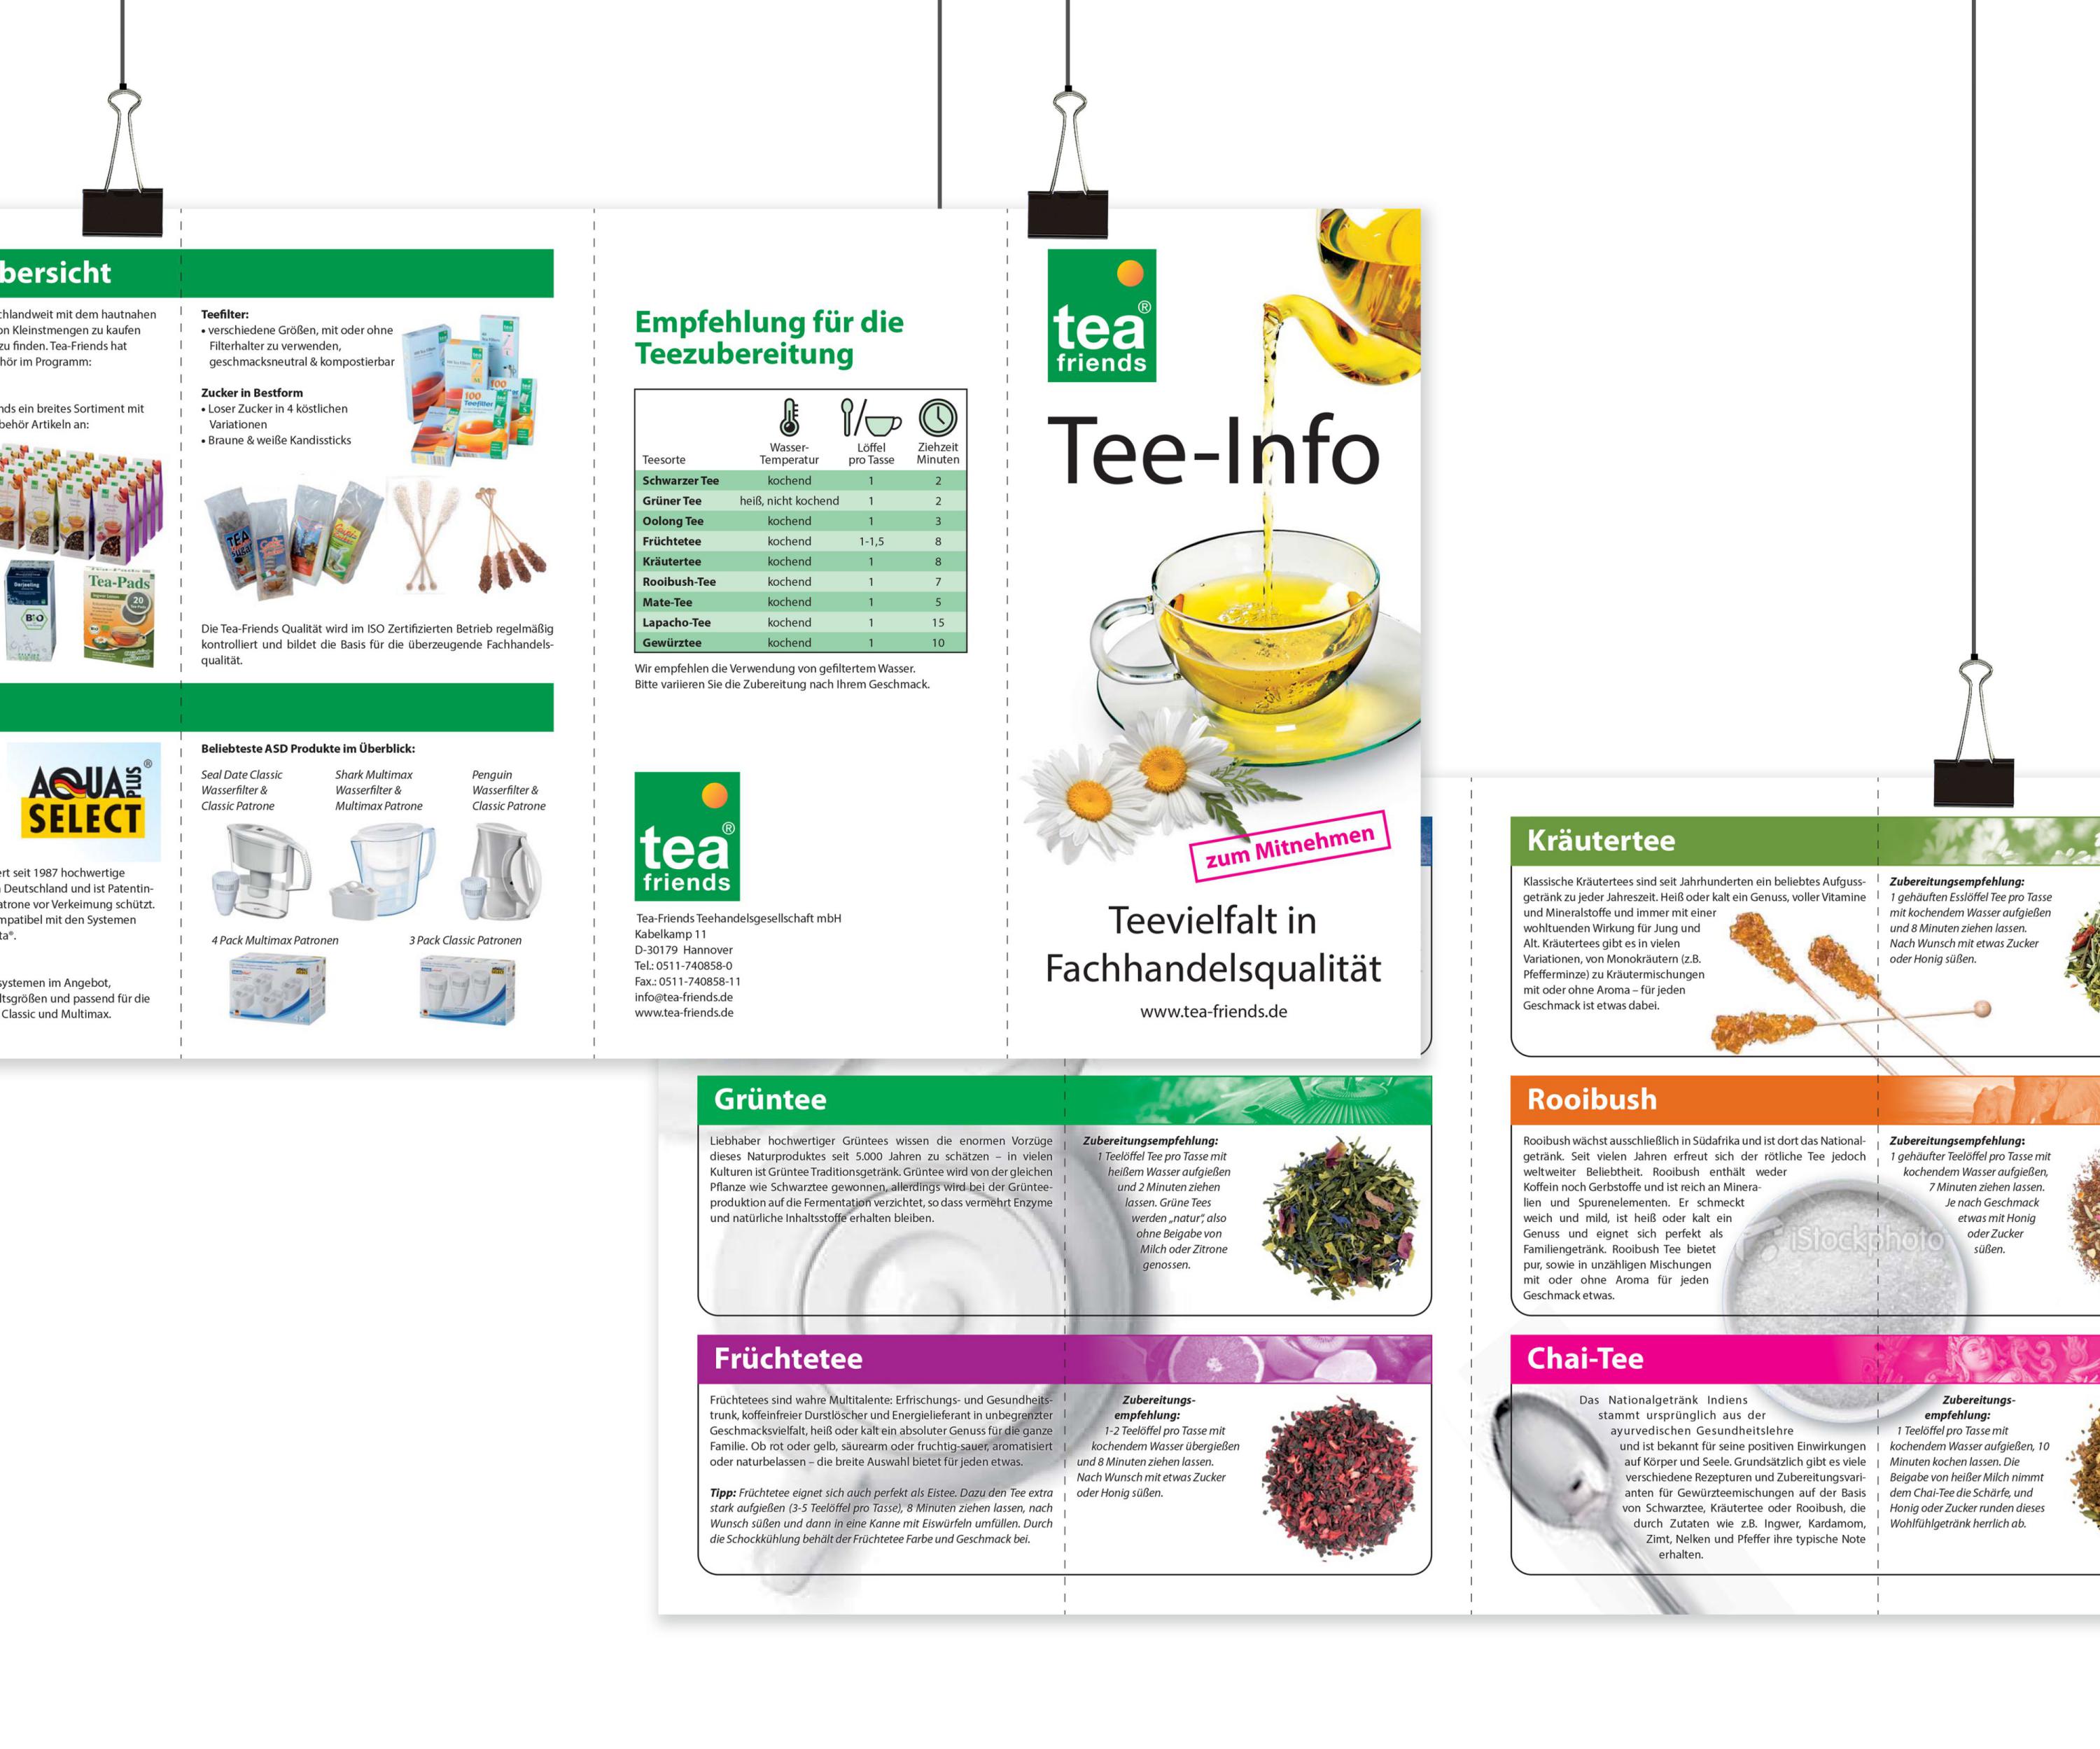 Flyer für die Tea-friends Teehandelsgesellschaft GmbH